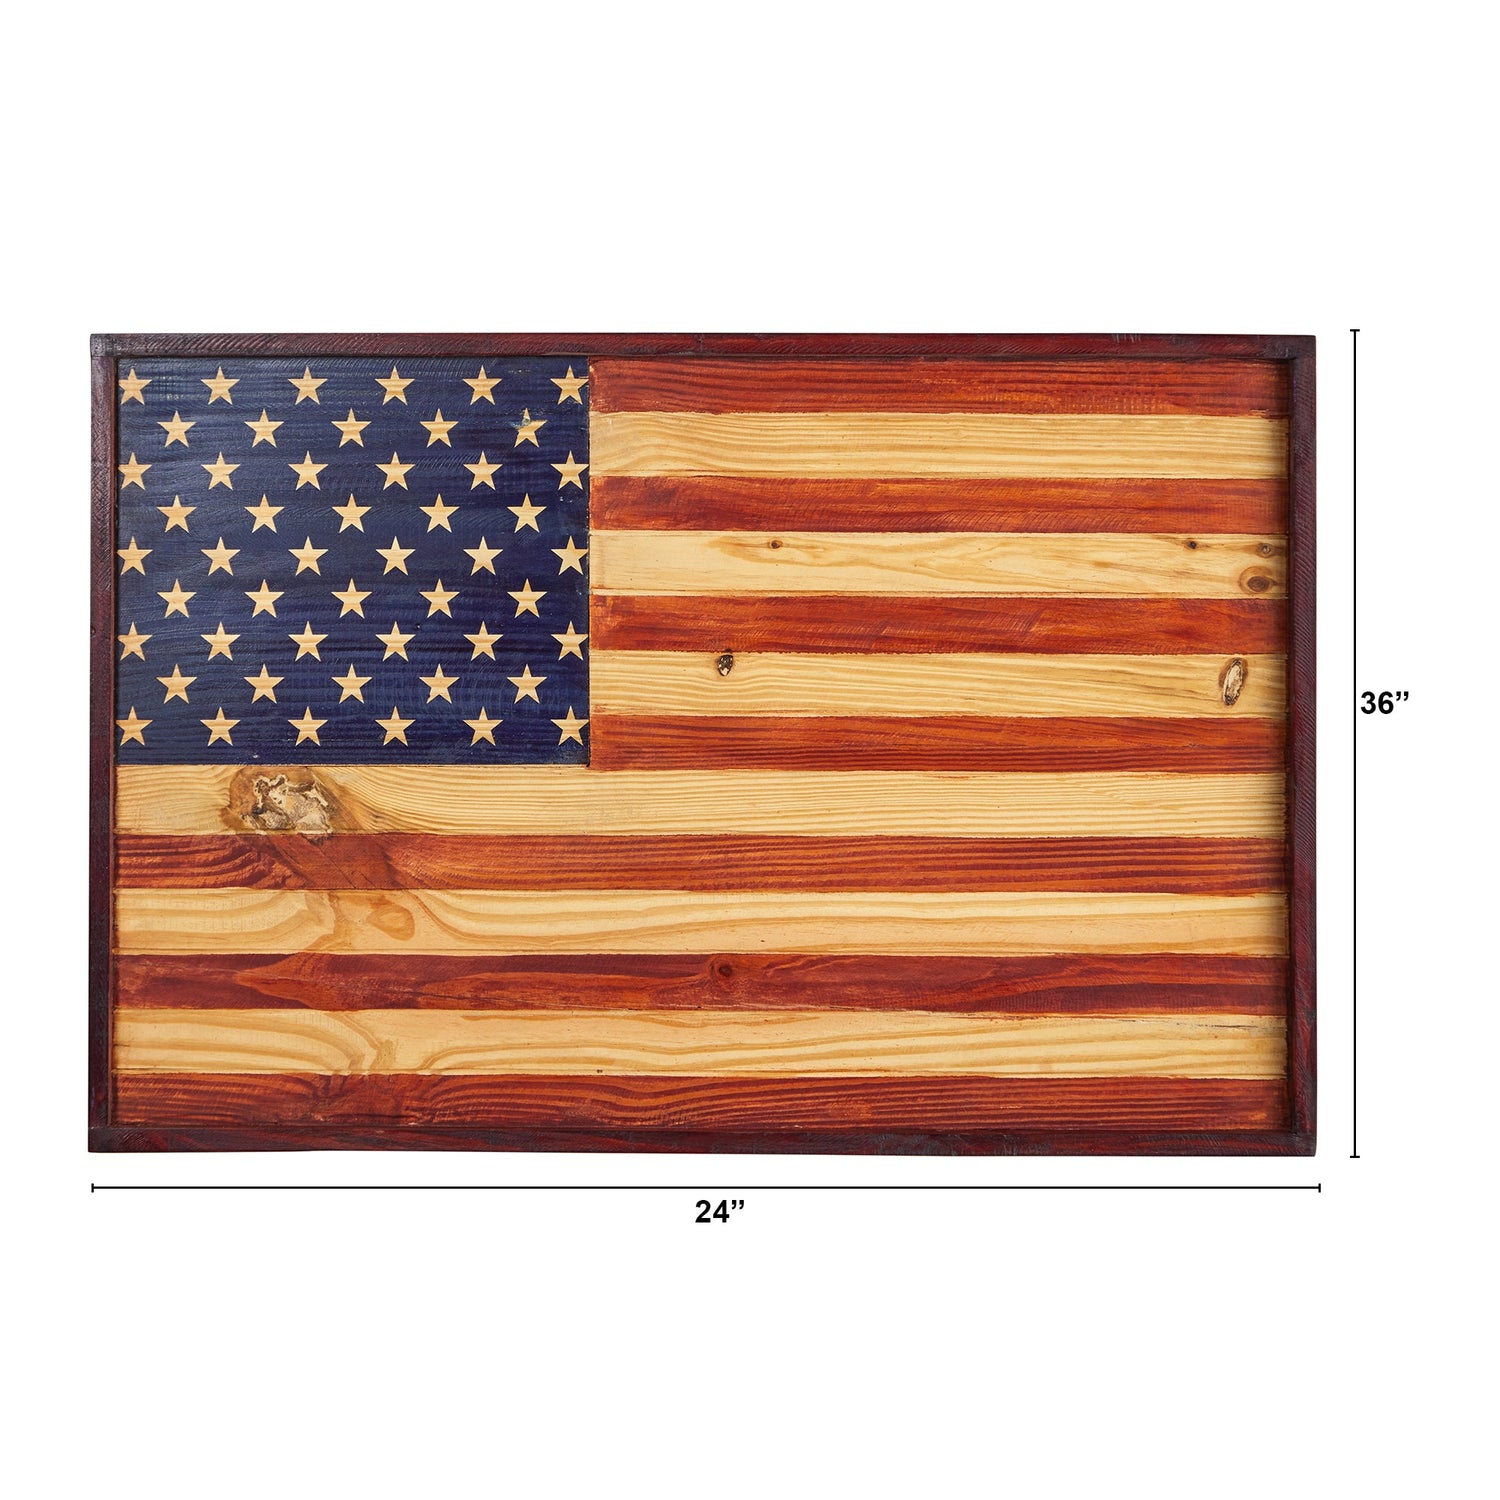 36” American Wood Flag Interior Wall Decor